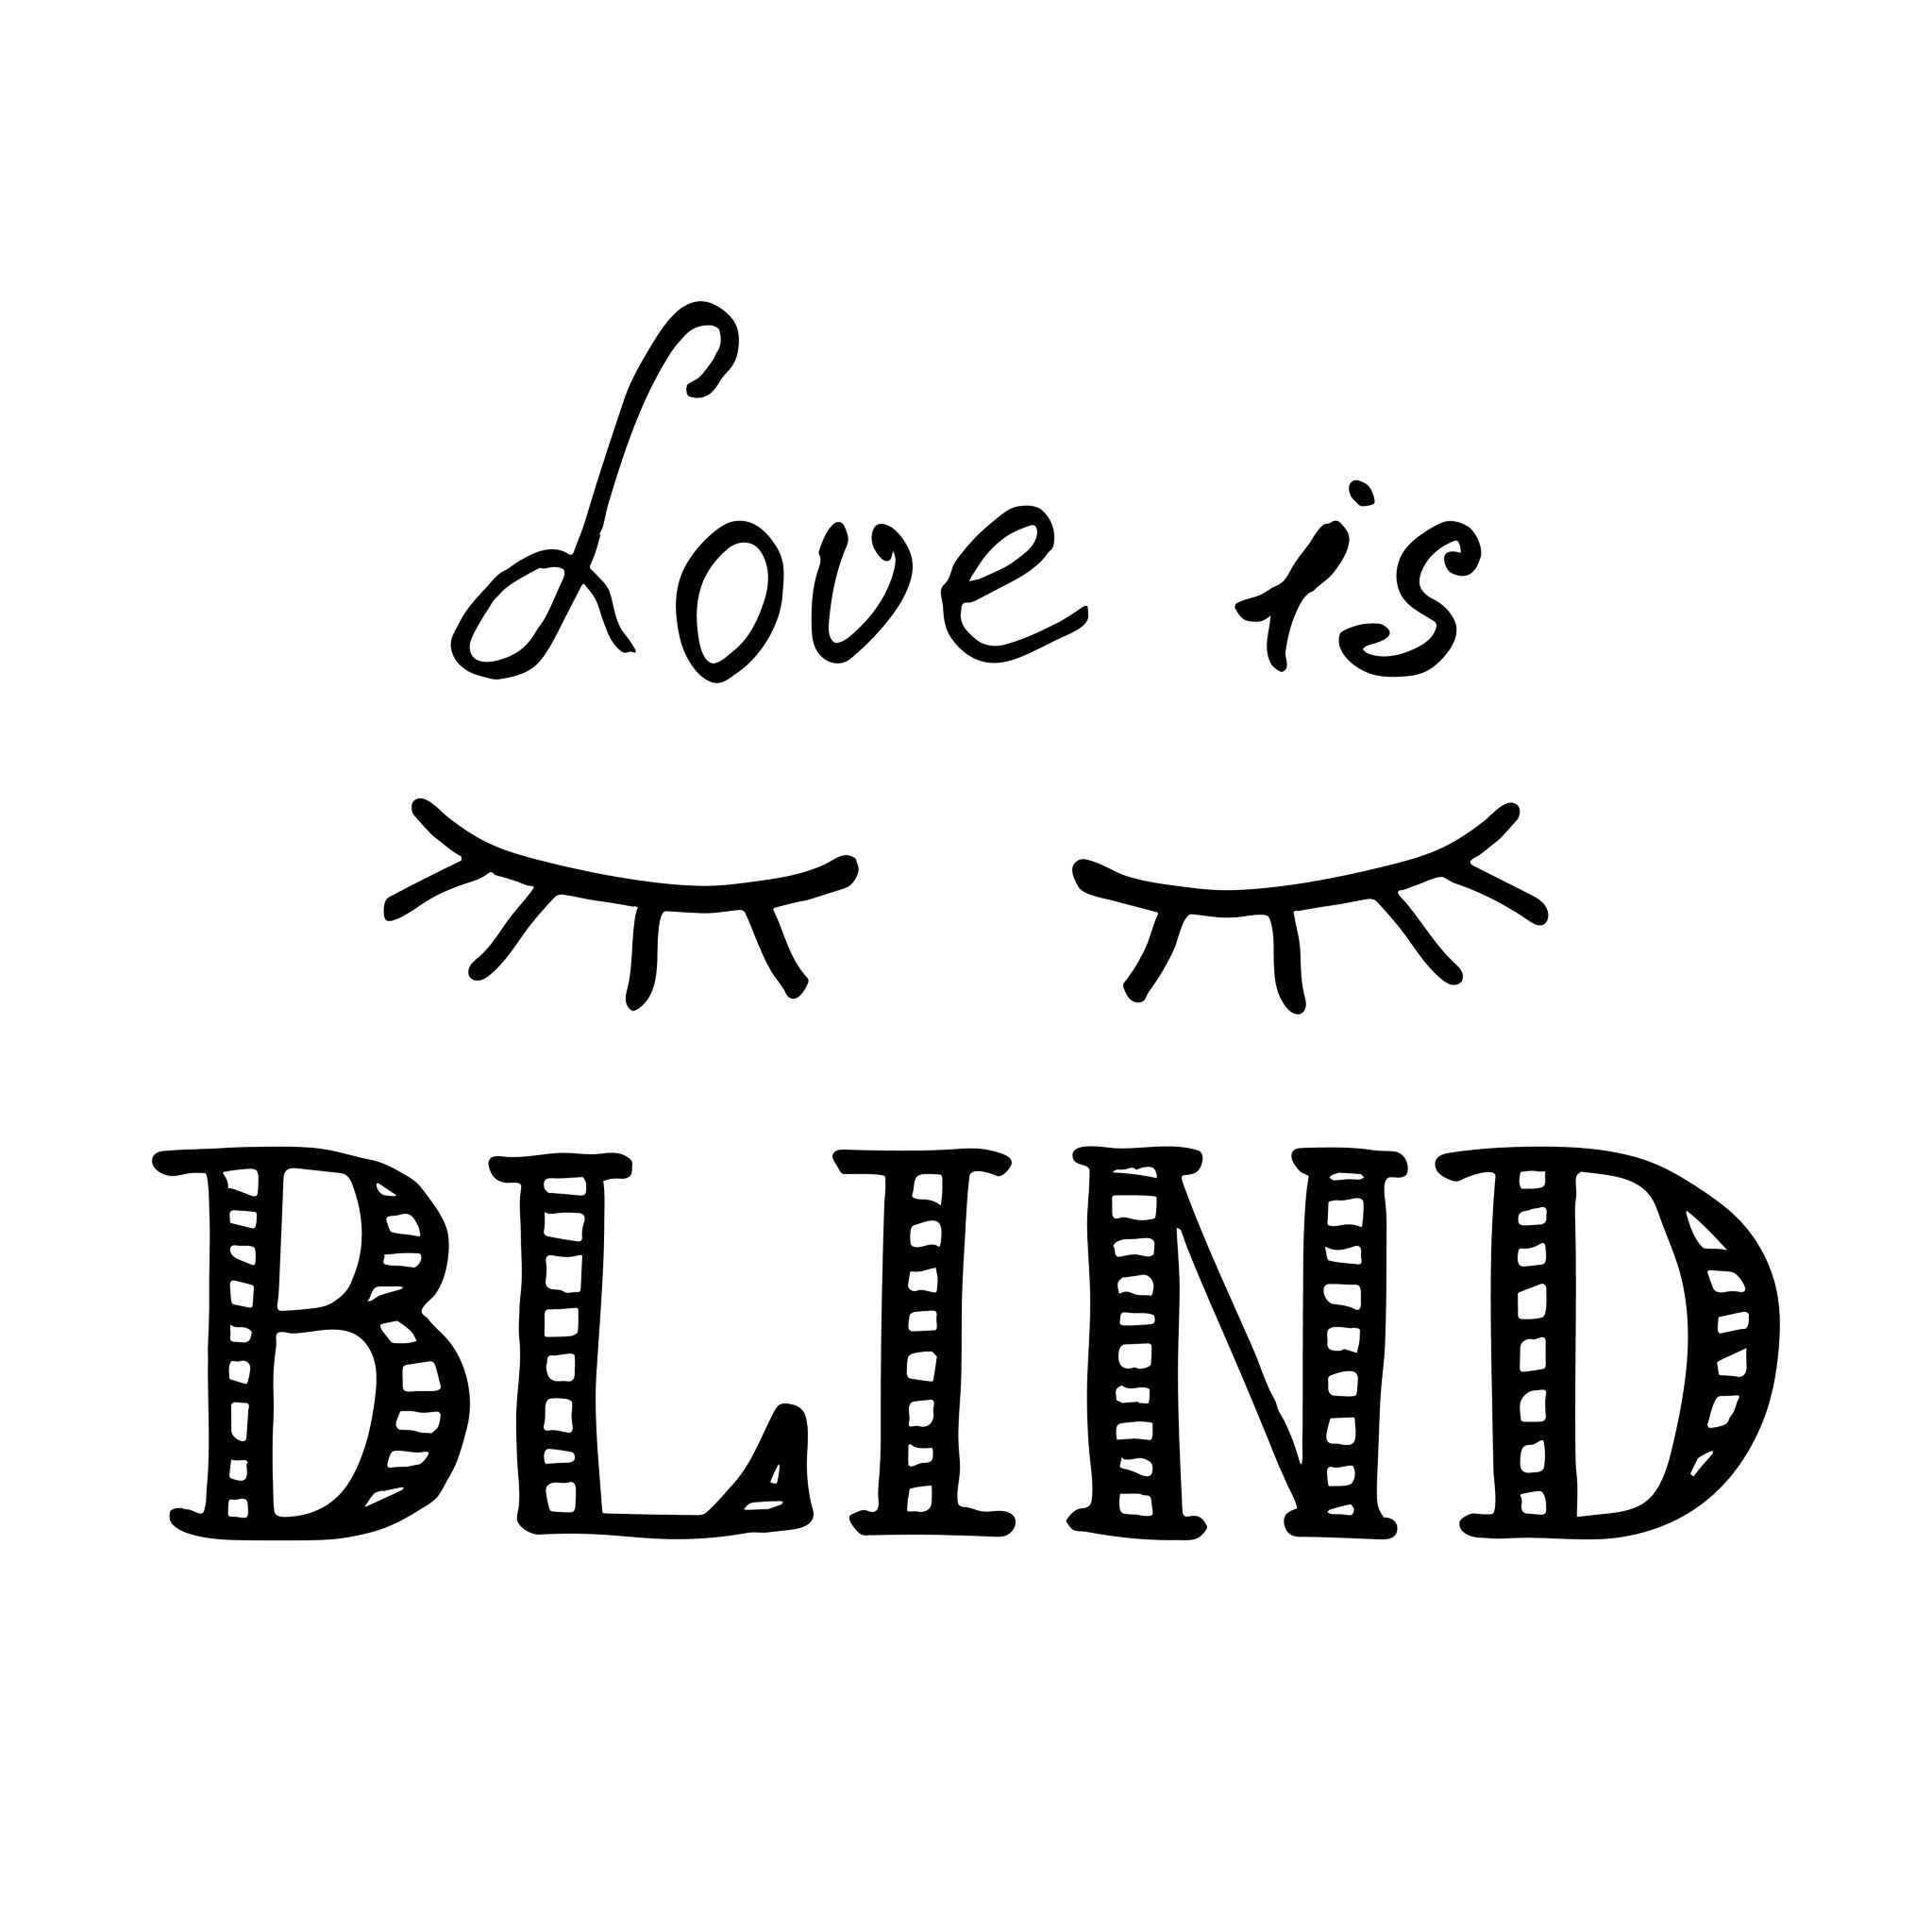 love is blind